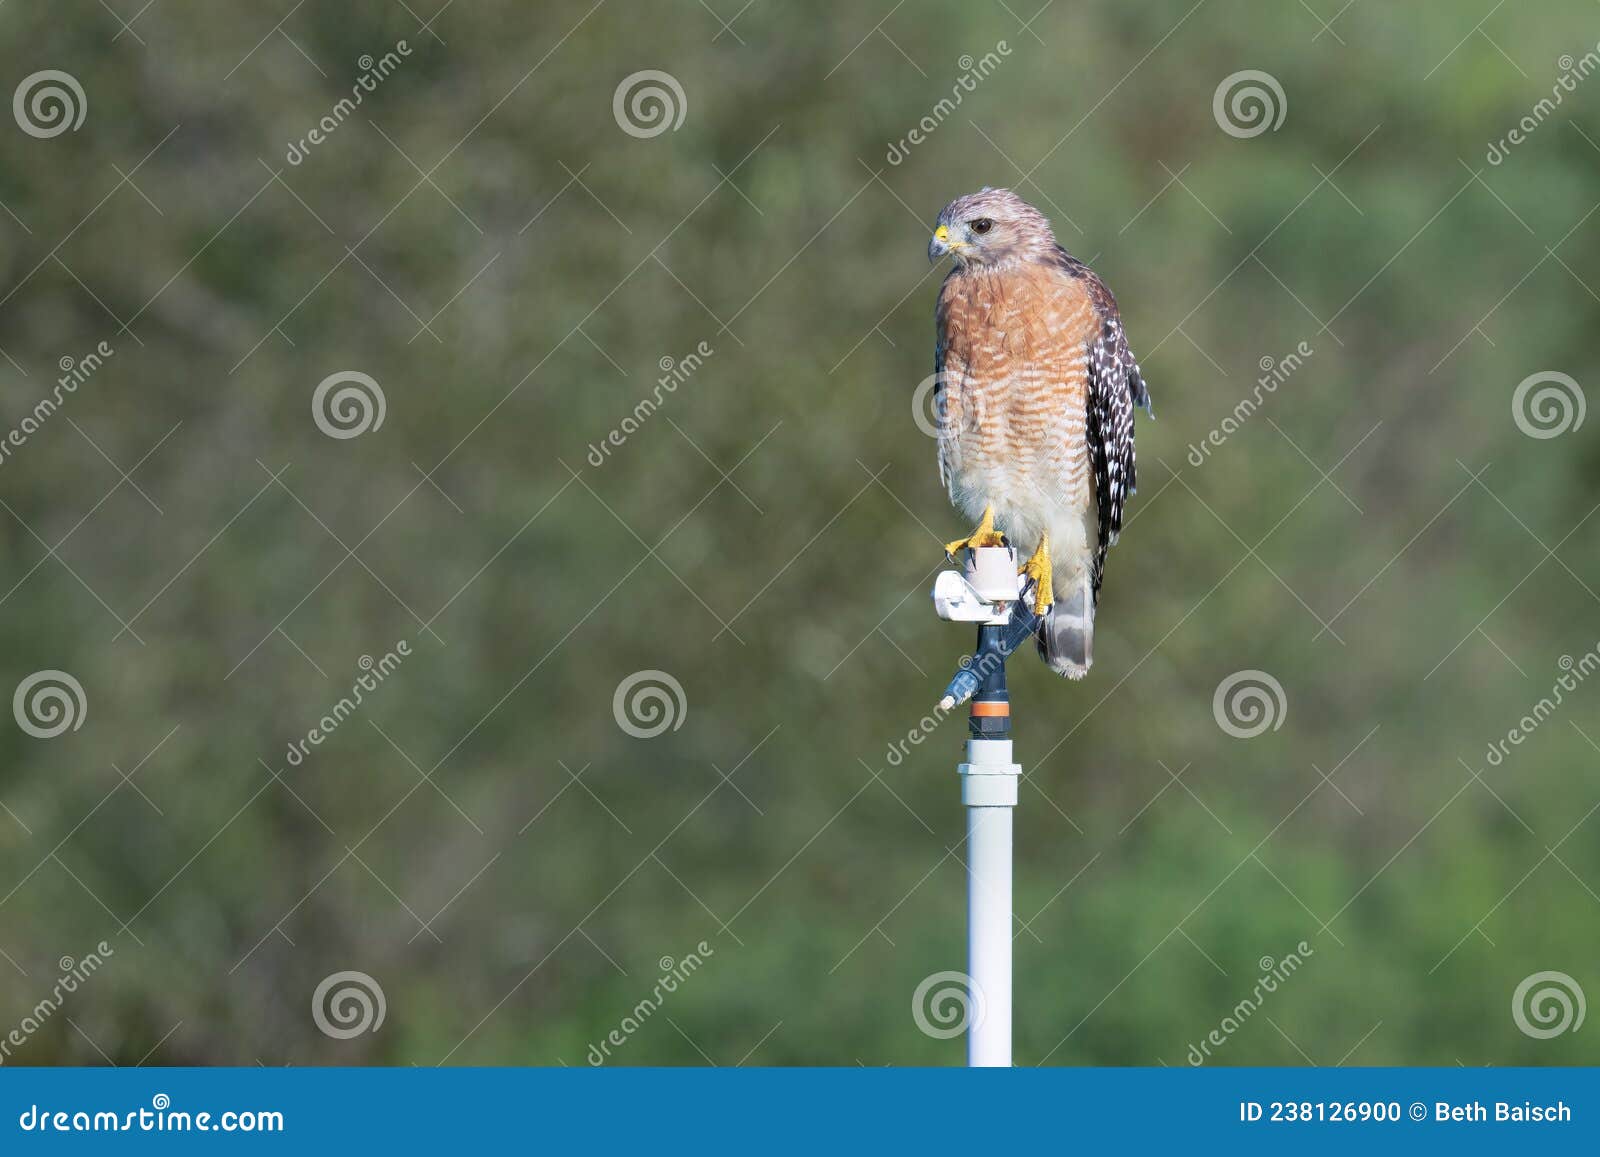 florida subspecies of red-shouldered hawk on sprinkler in farmer`s field